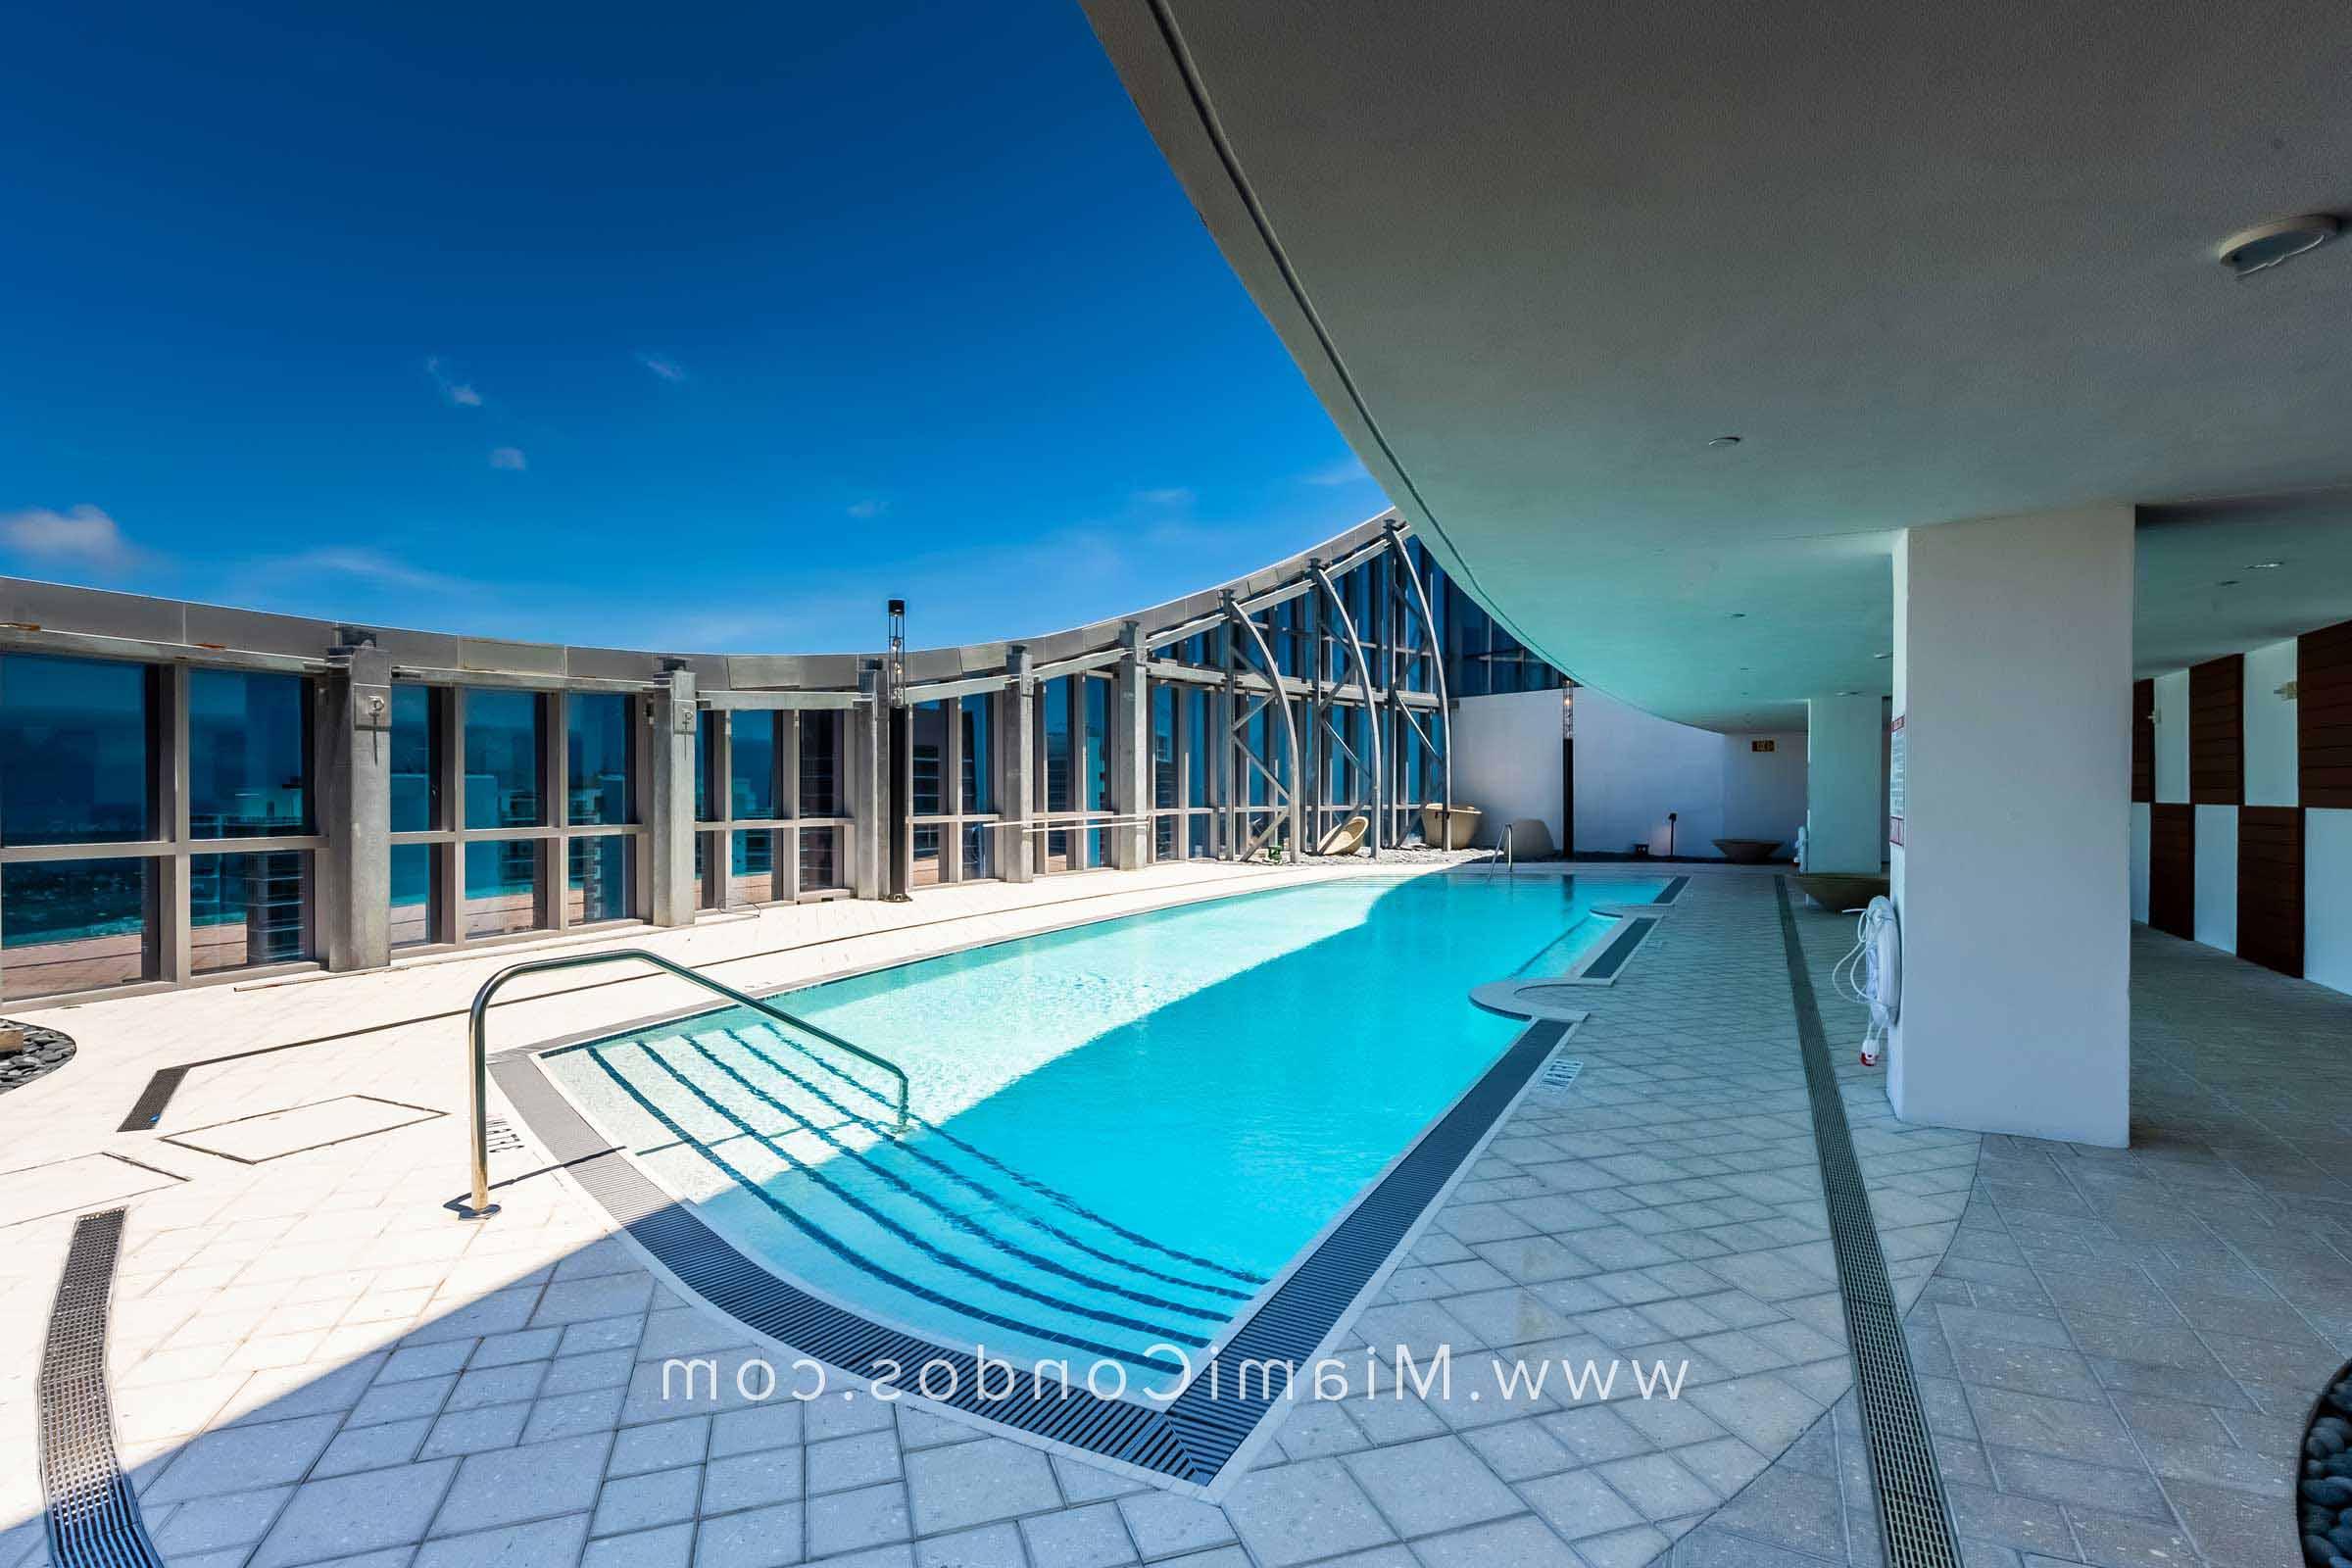 Paramount Miami Rooftop Swimming Pool